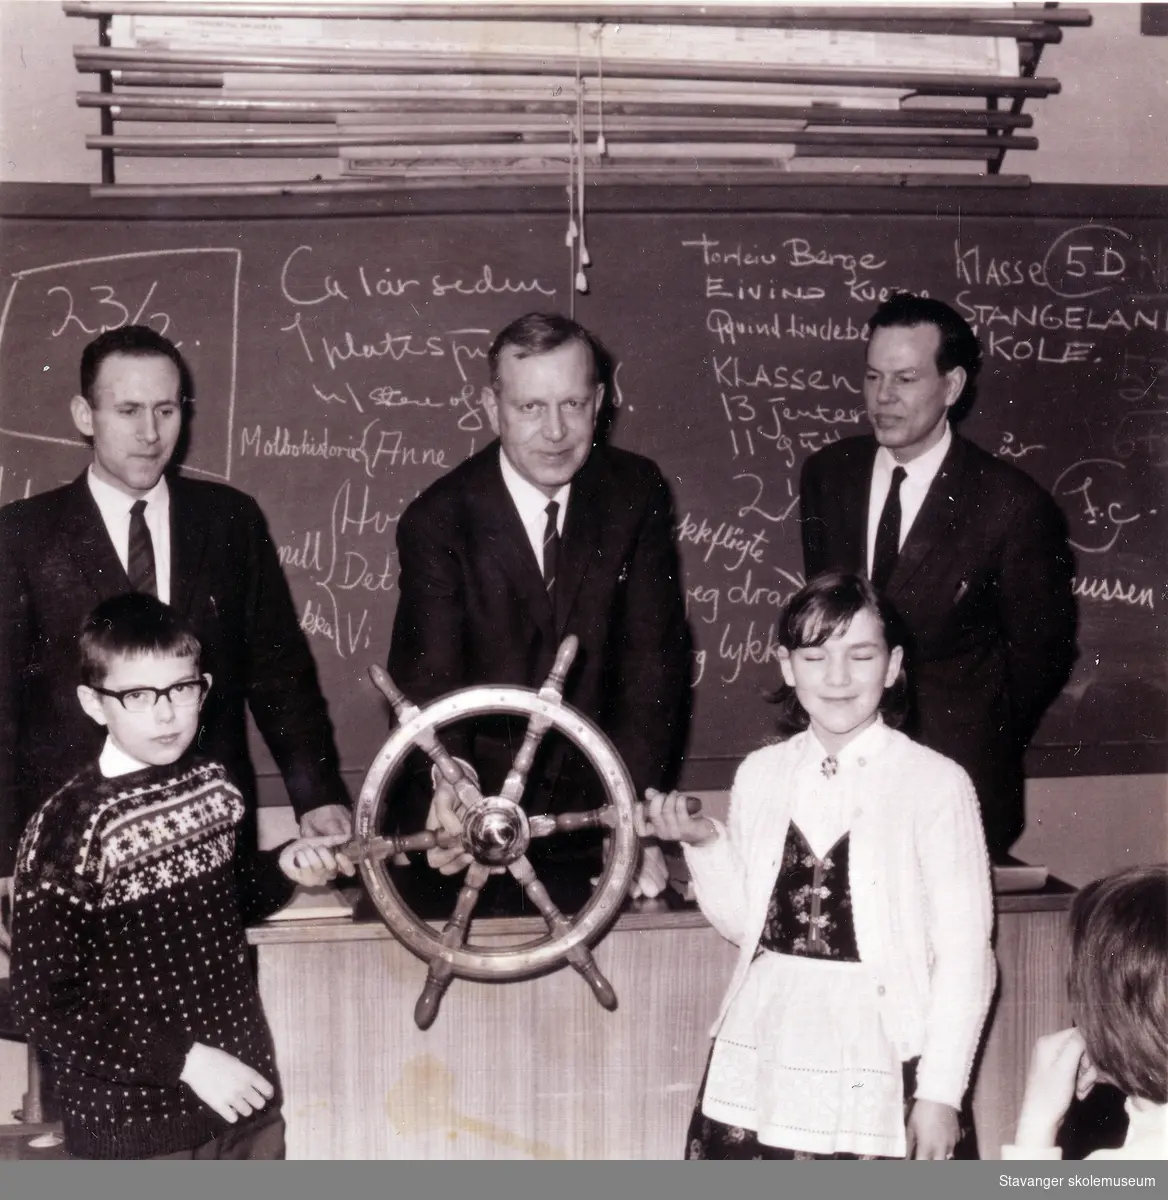 Stangeland skole, Sandnes, har mottatt gave fra en båt som klassen brevvekslet med. 1967.